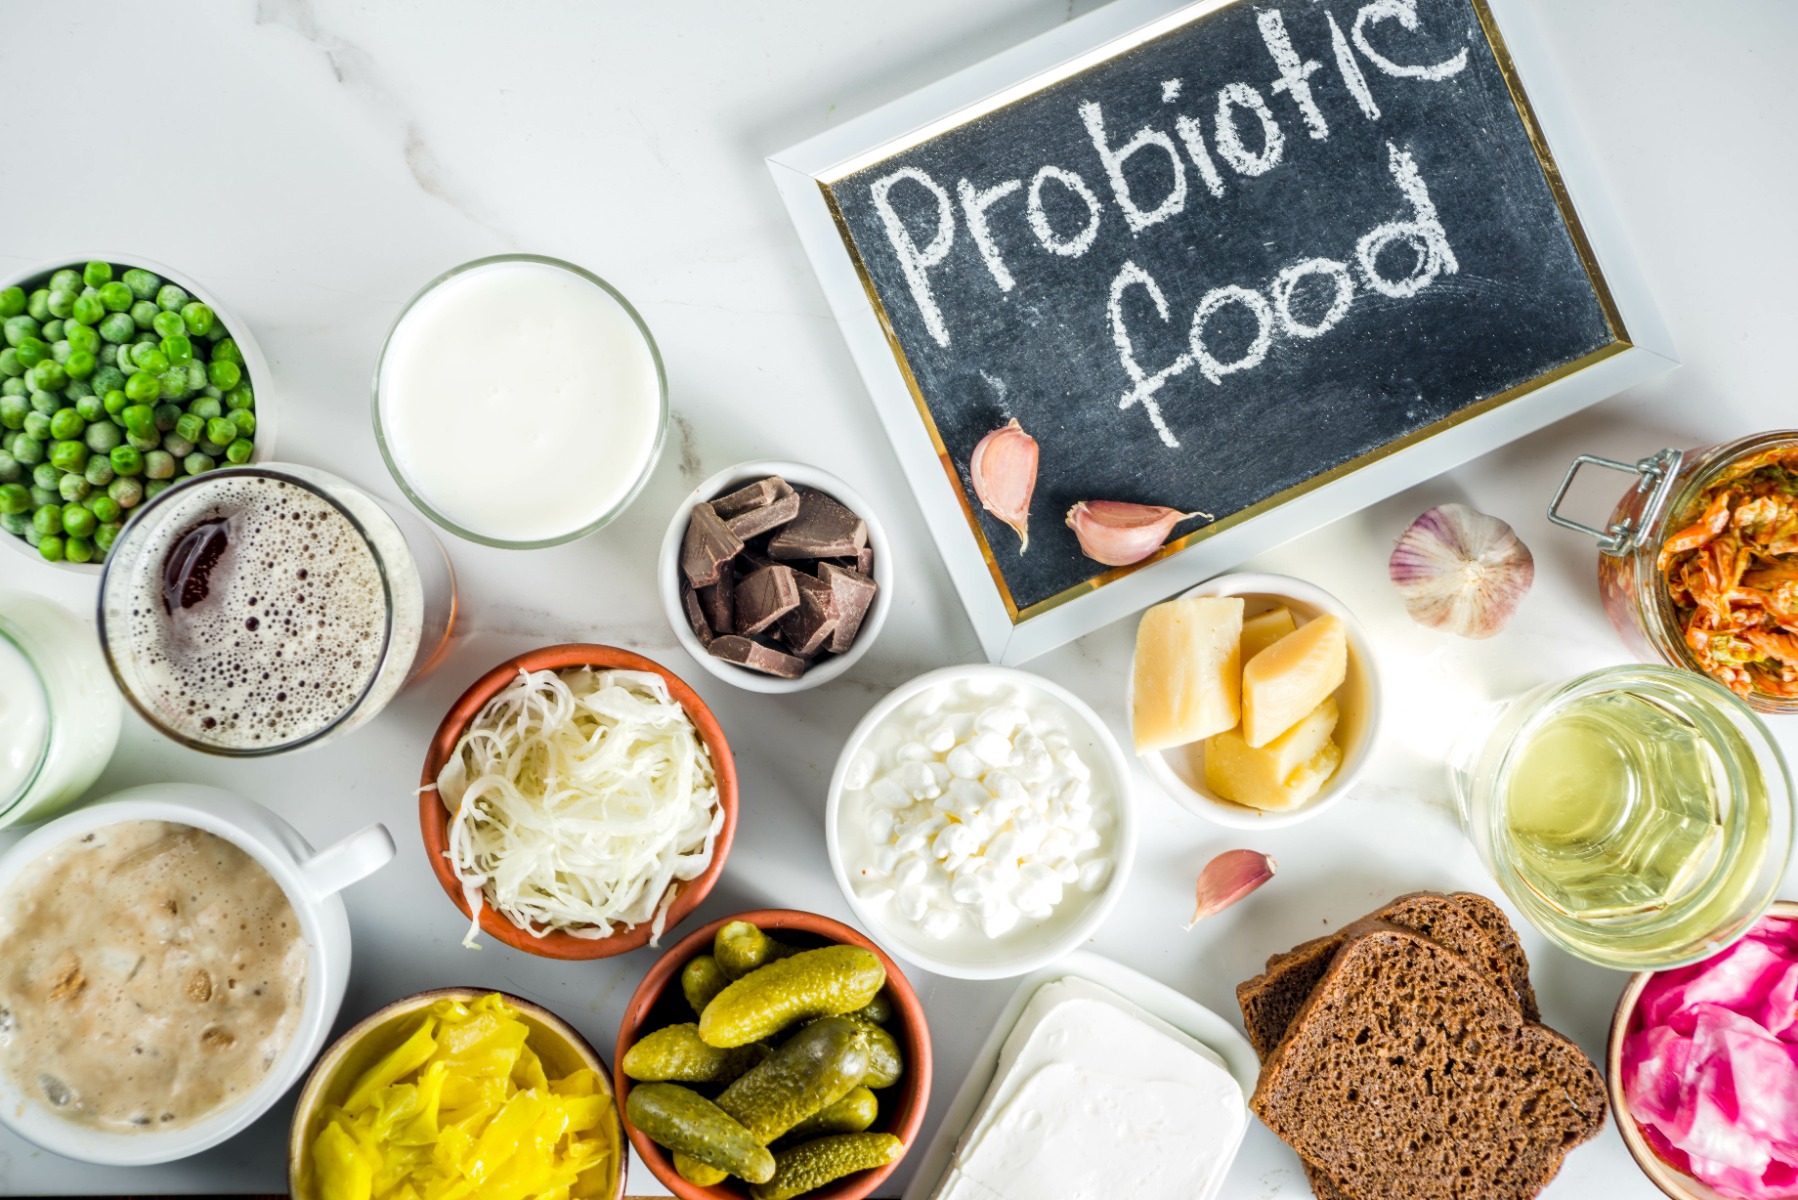 Food with high probiotics